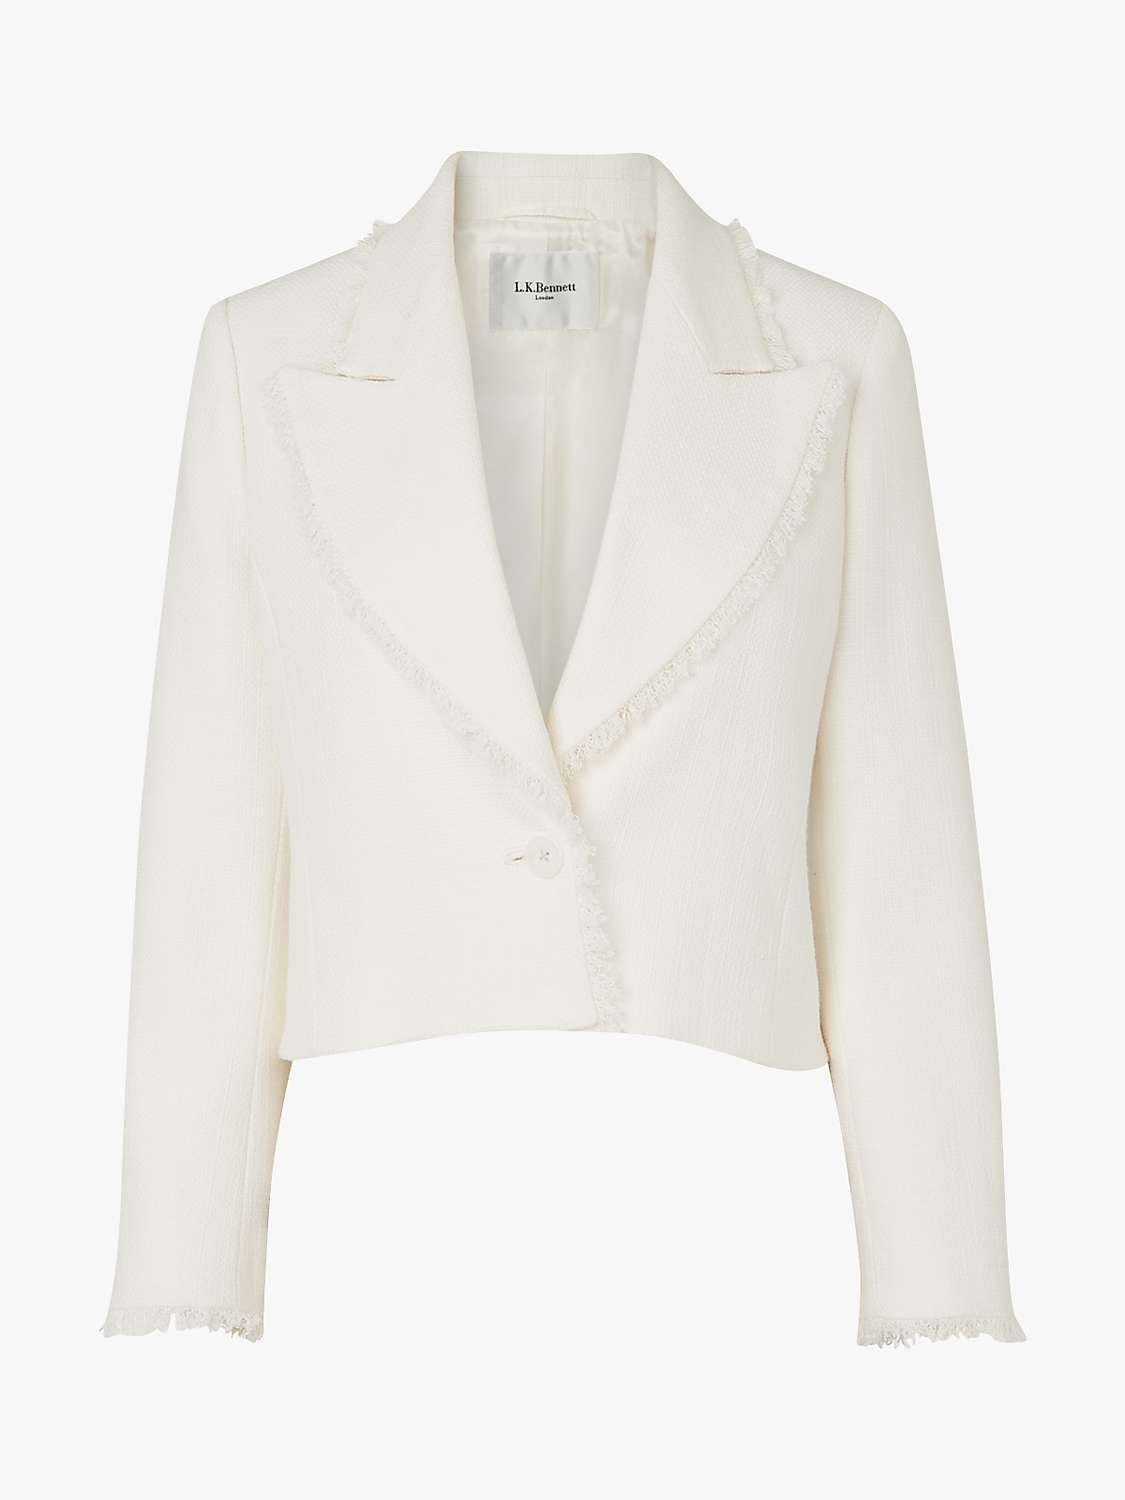 L.K Bennett Ellen Tweed Jacket, Cream at John Lewis & Partners